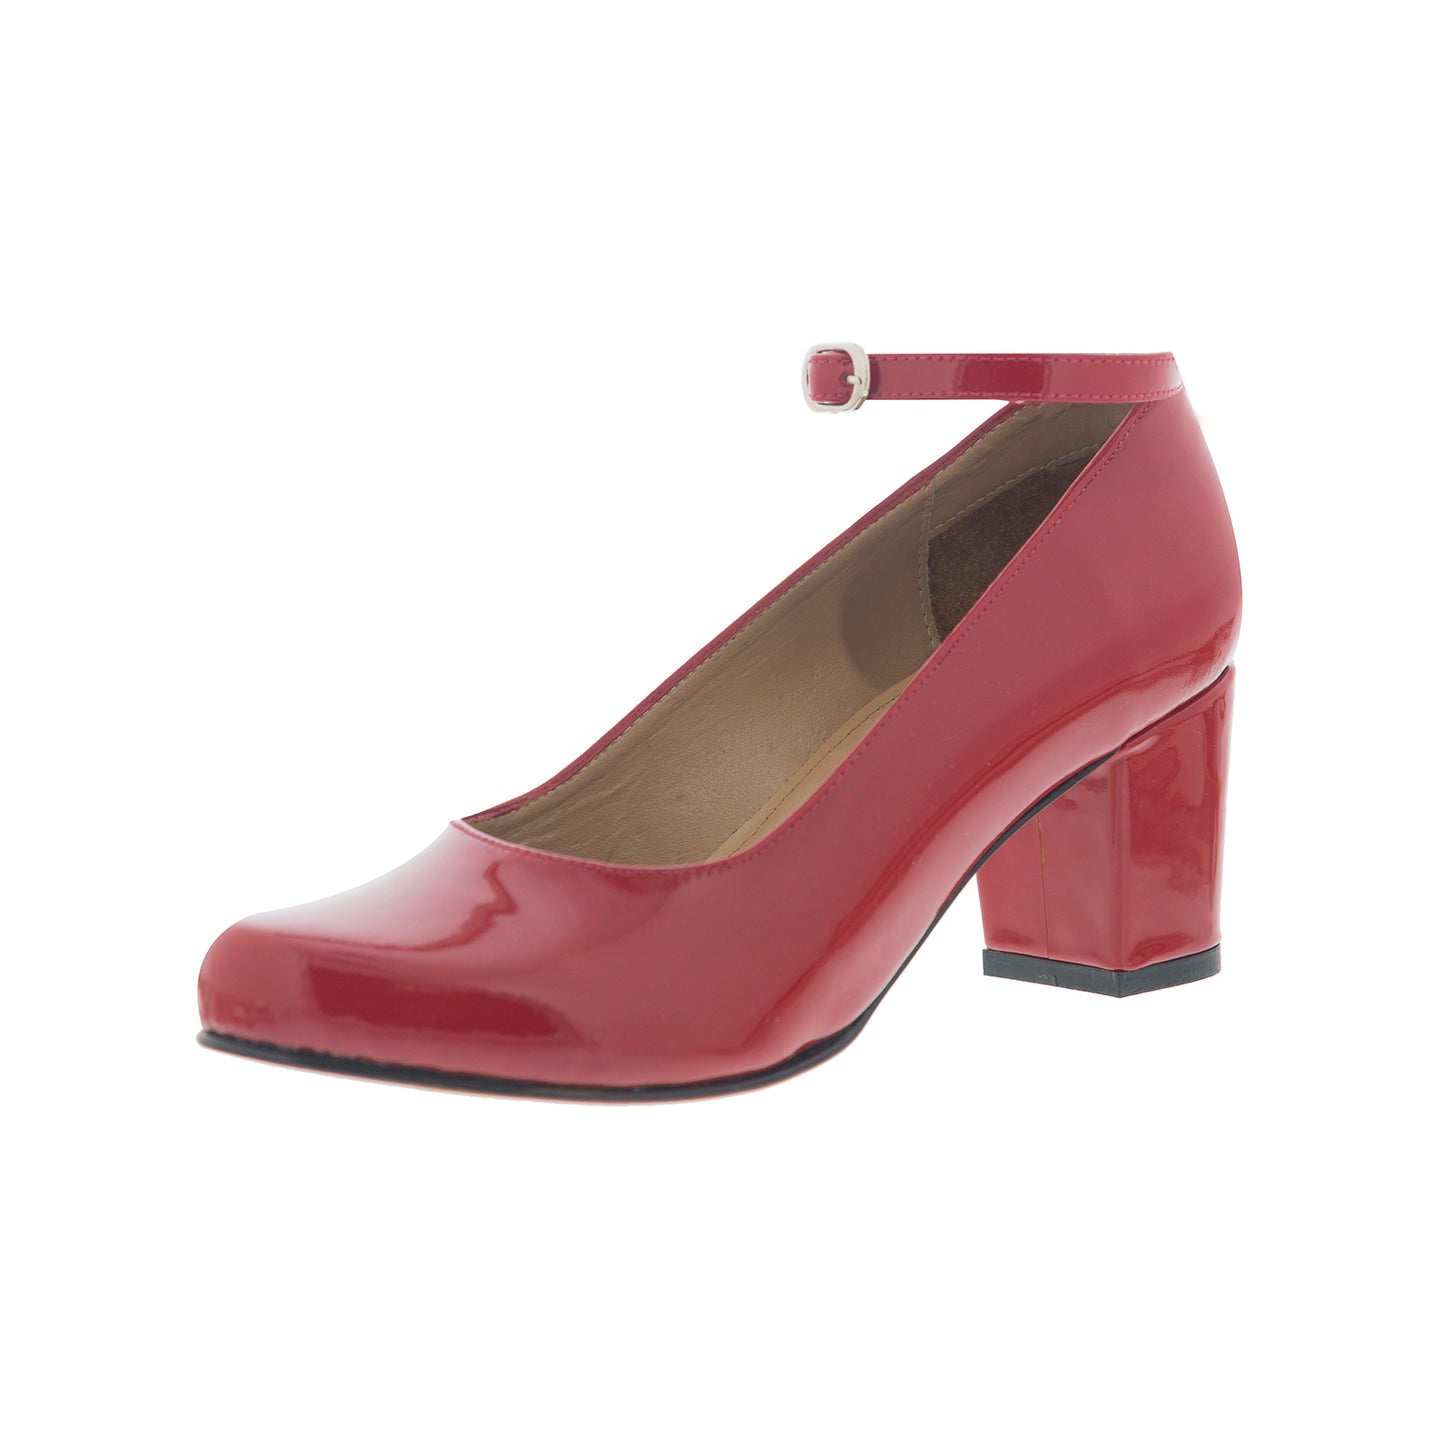 Charlotte heels - Size 35